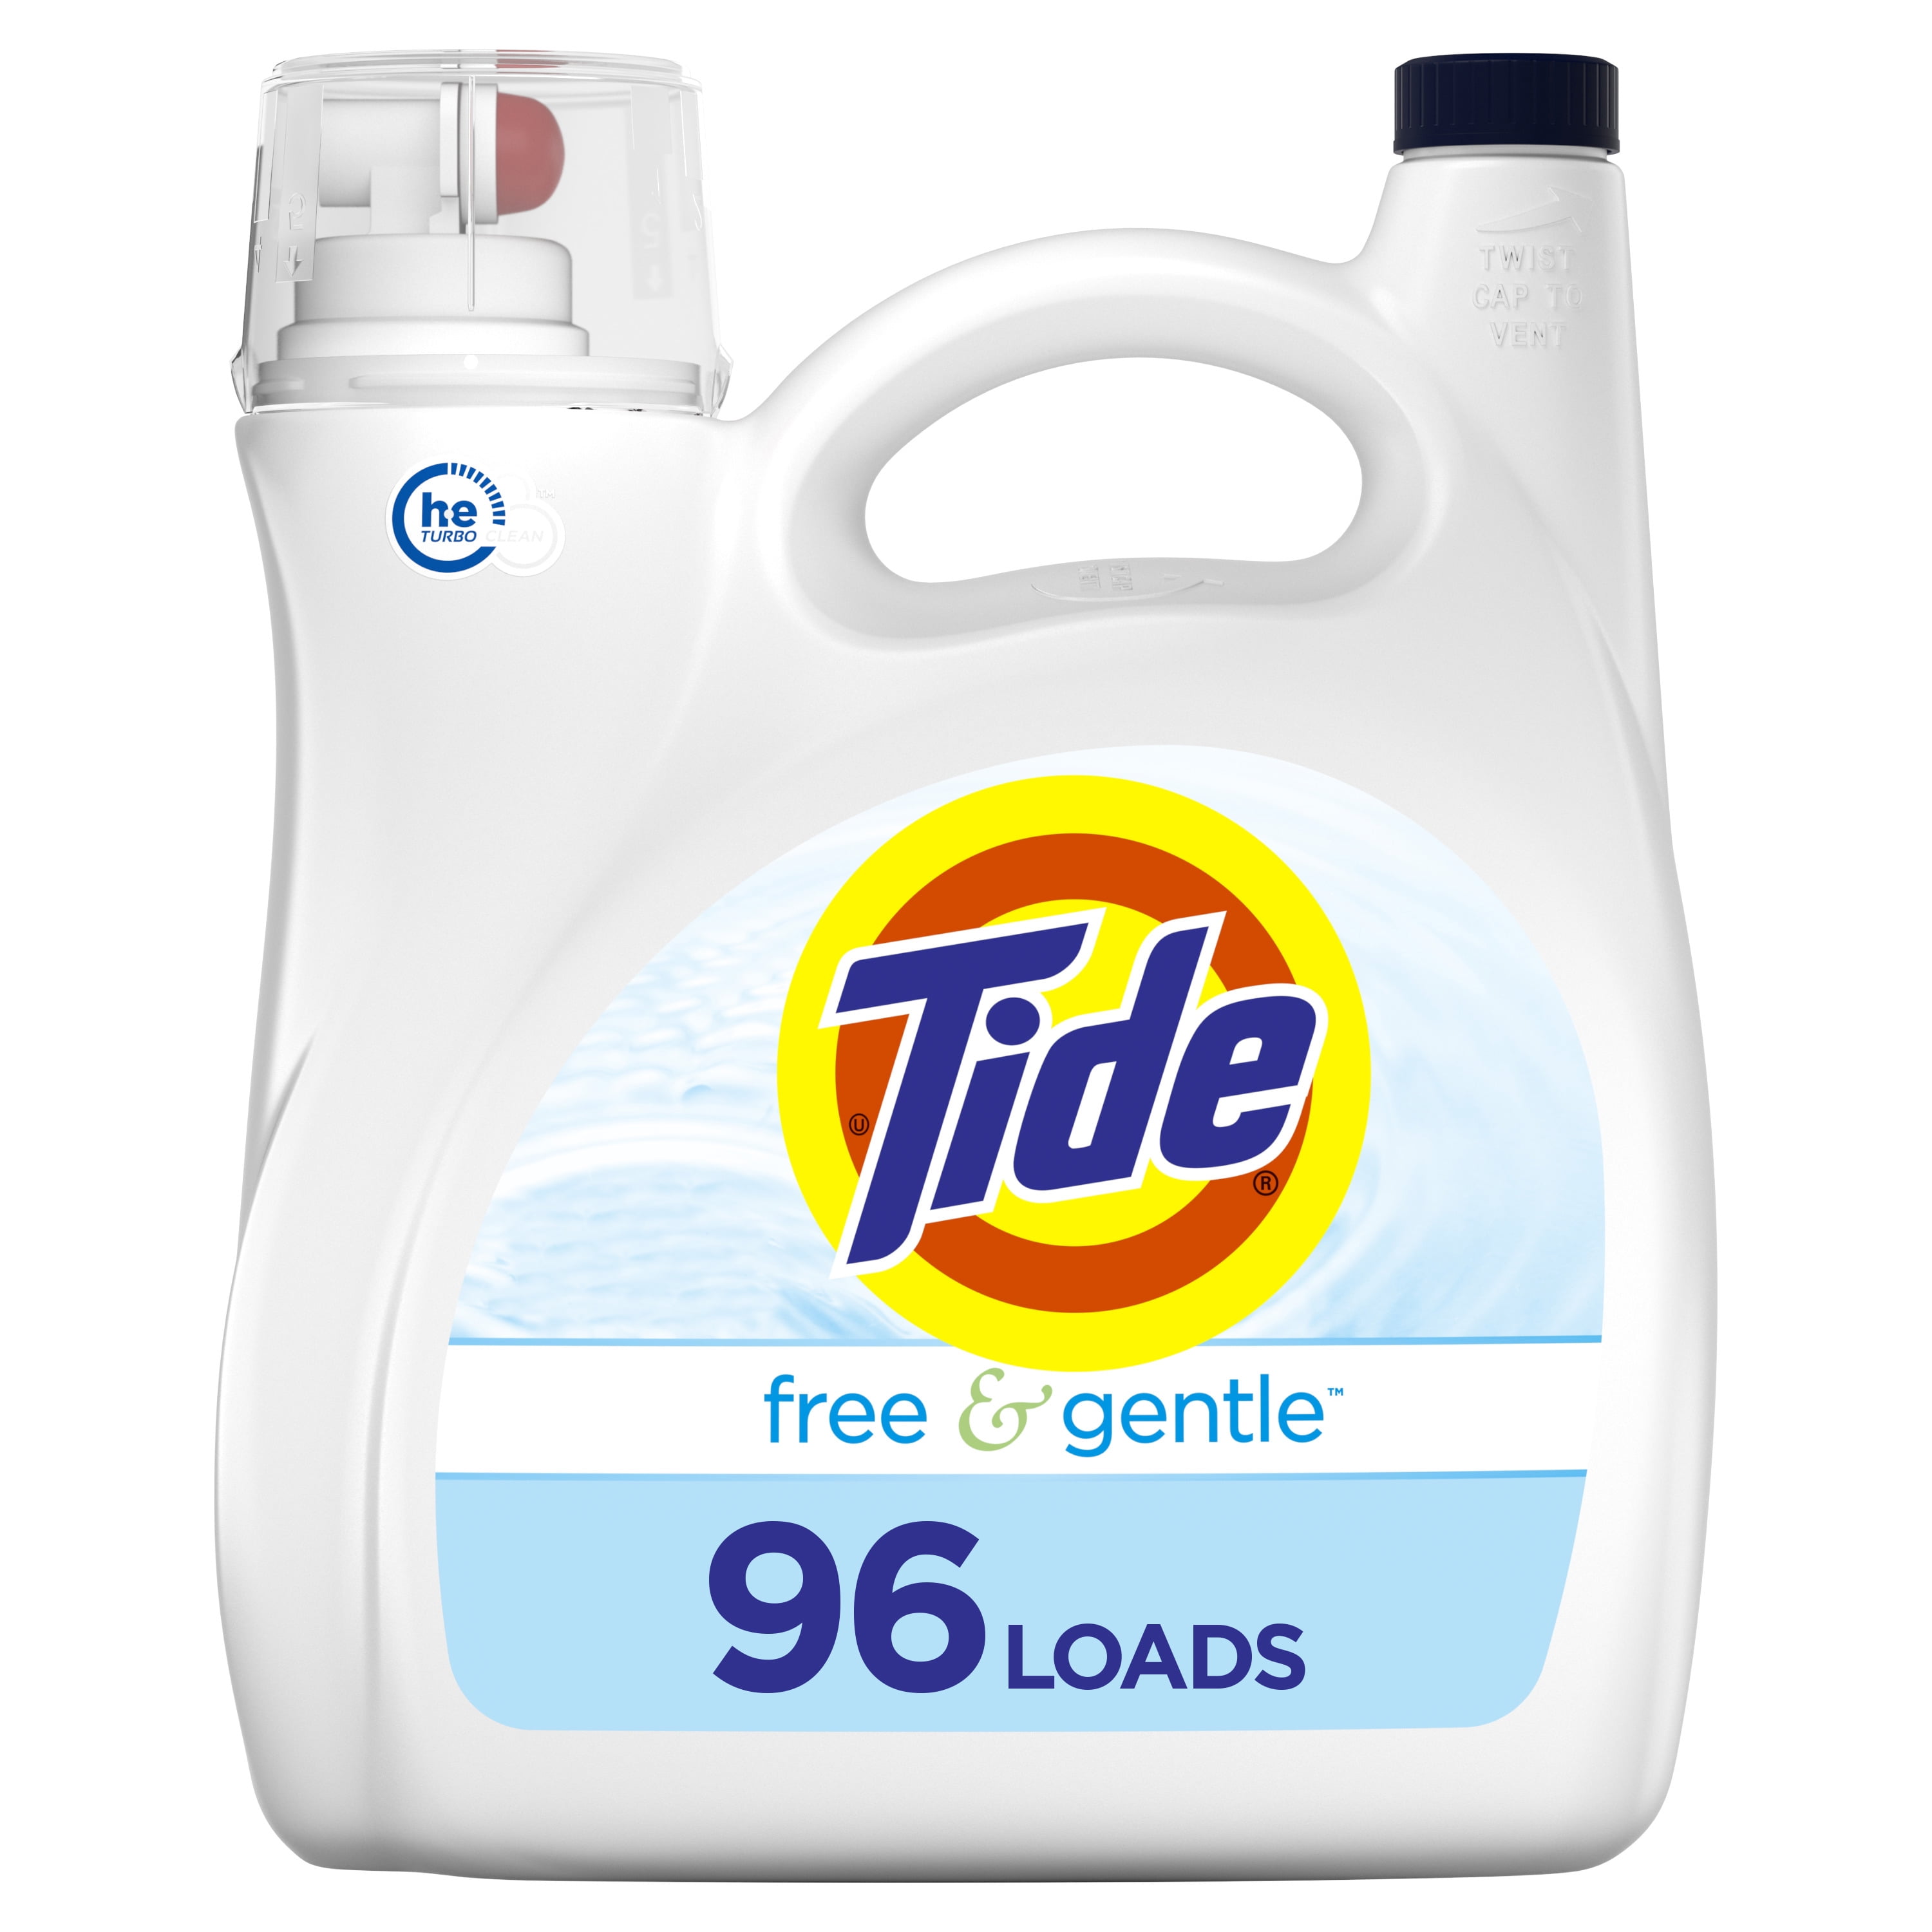 he laundry detergent brands